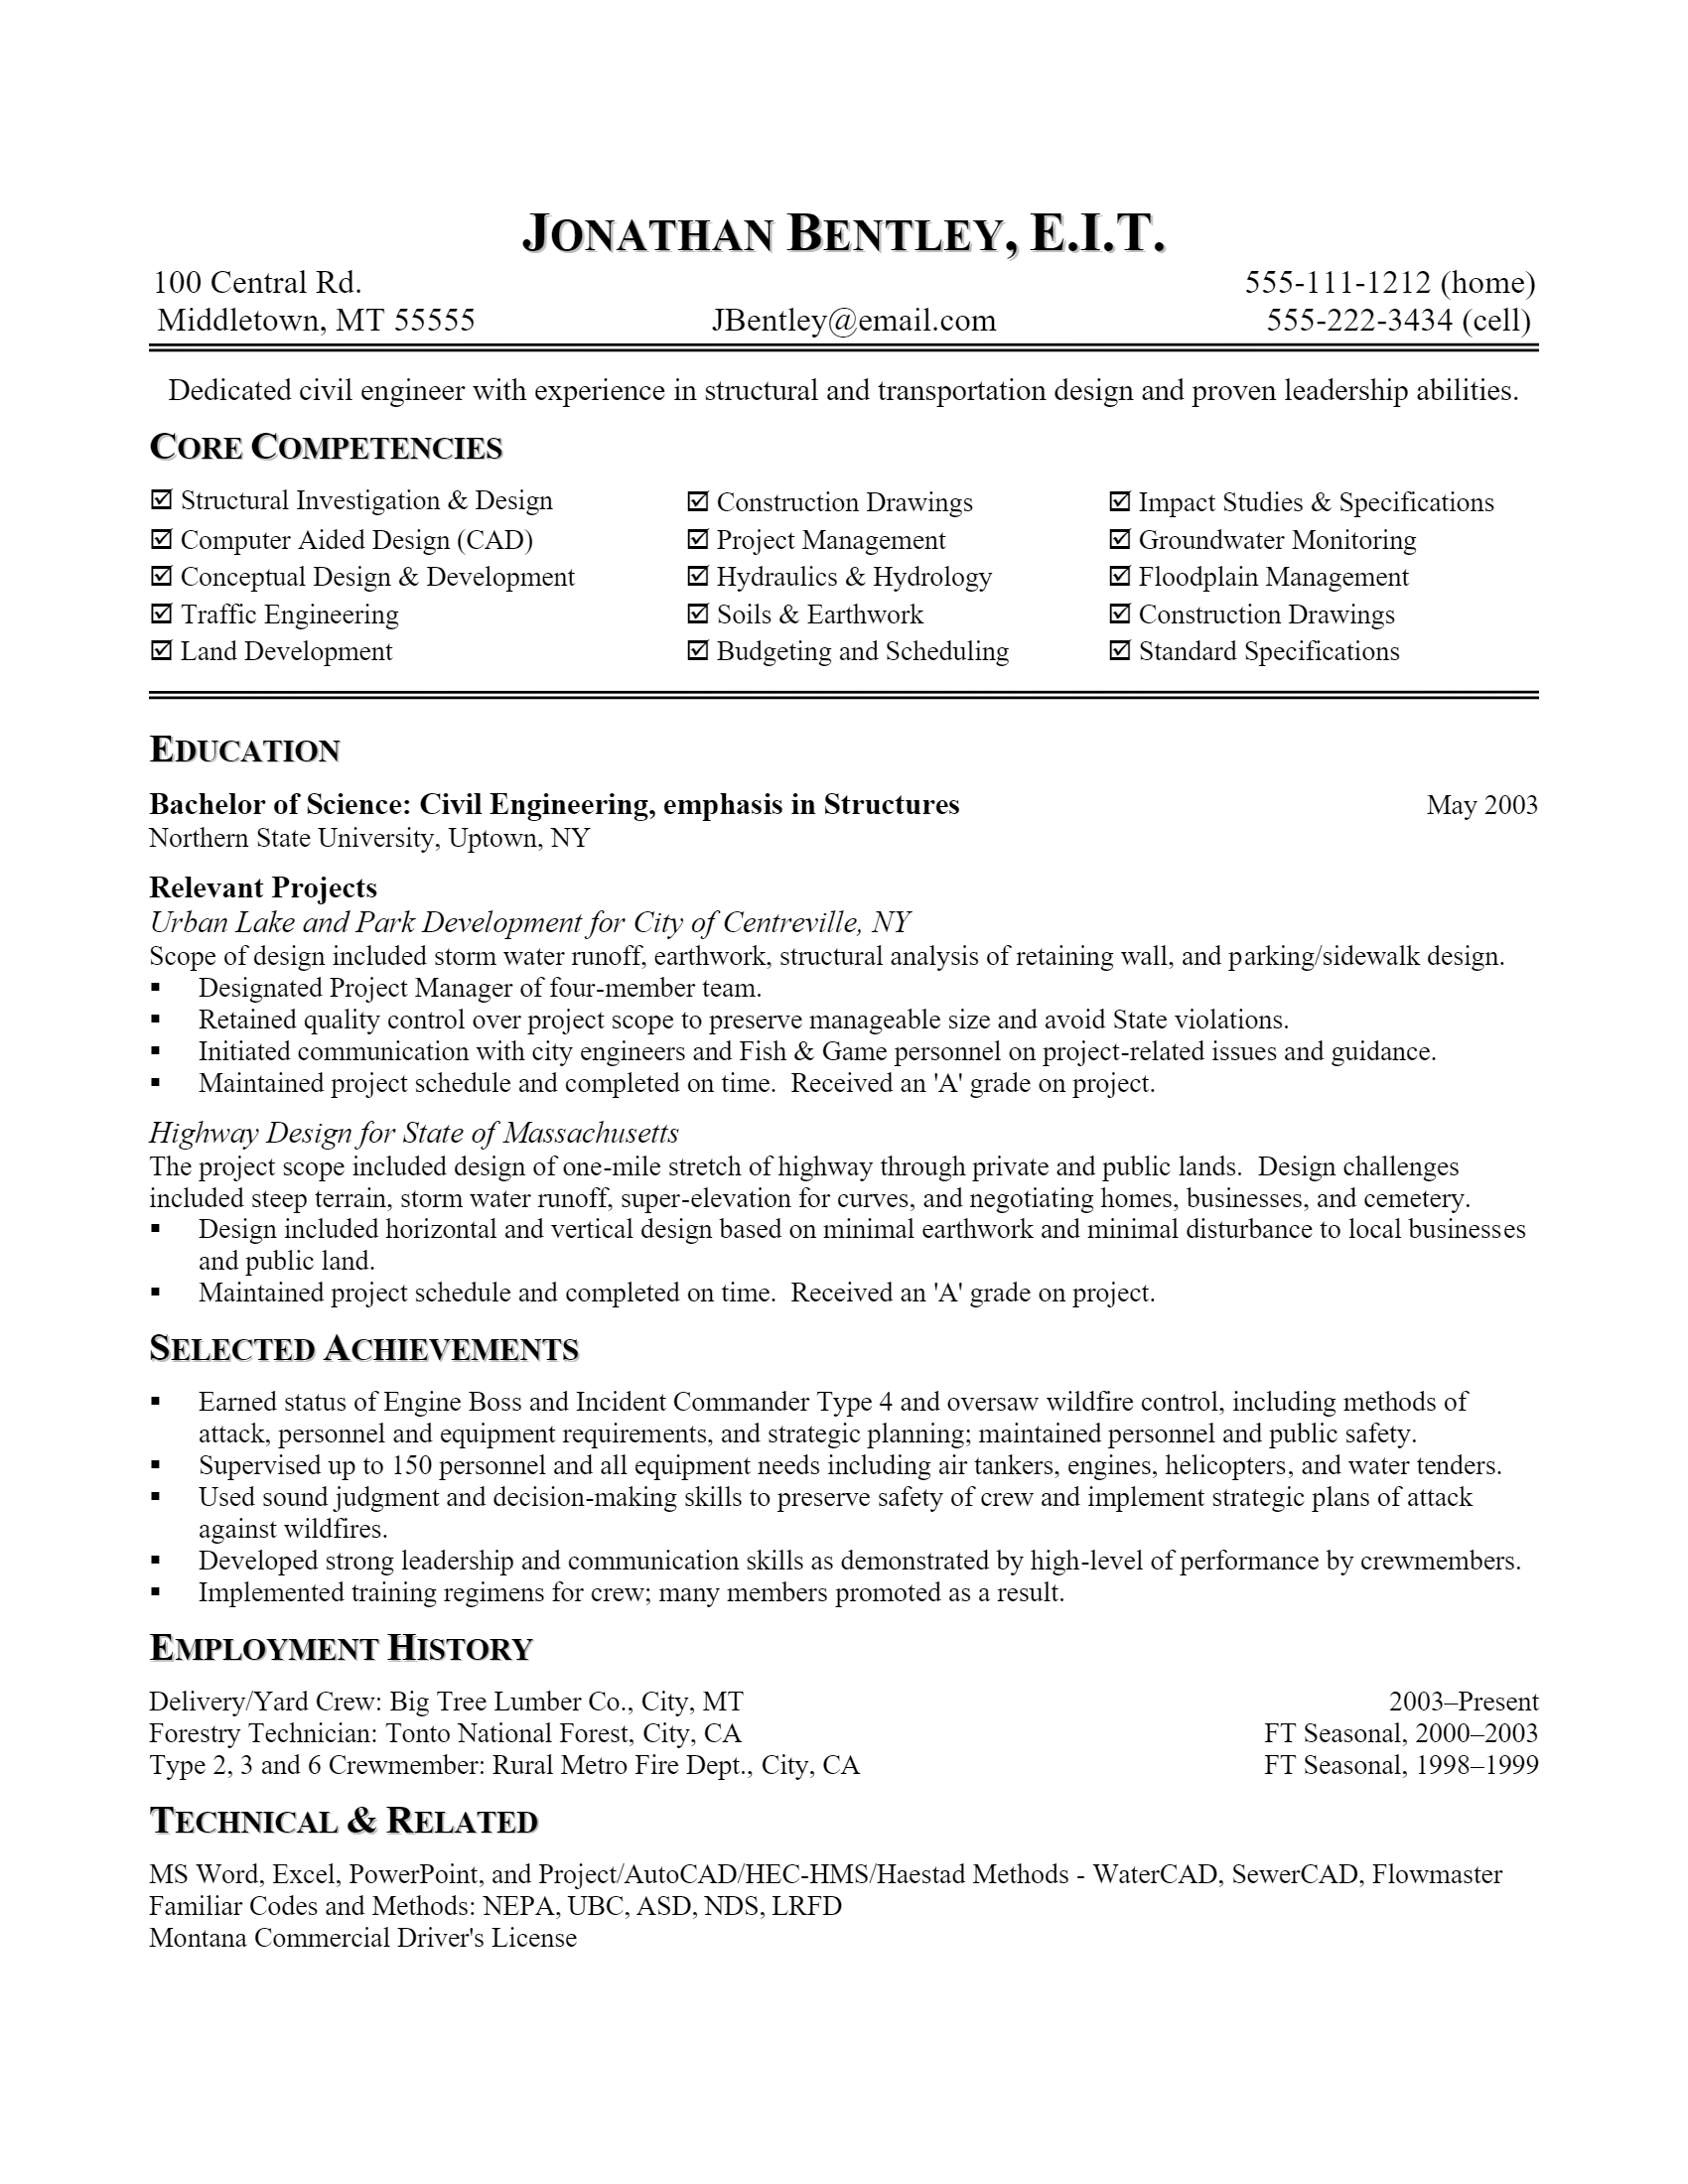 Civil Engineer Resume .Docx (Word)